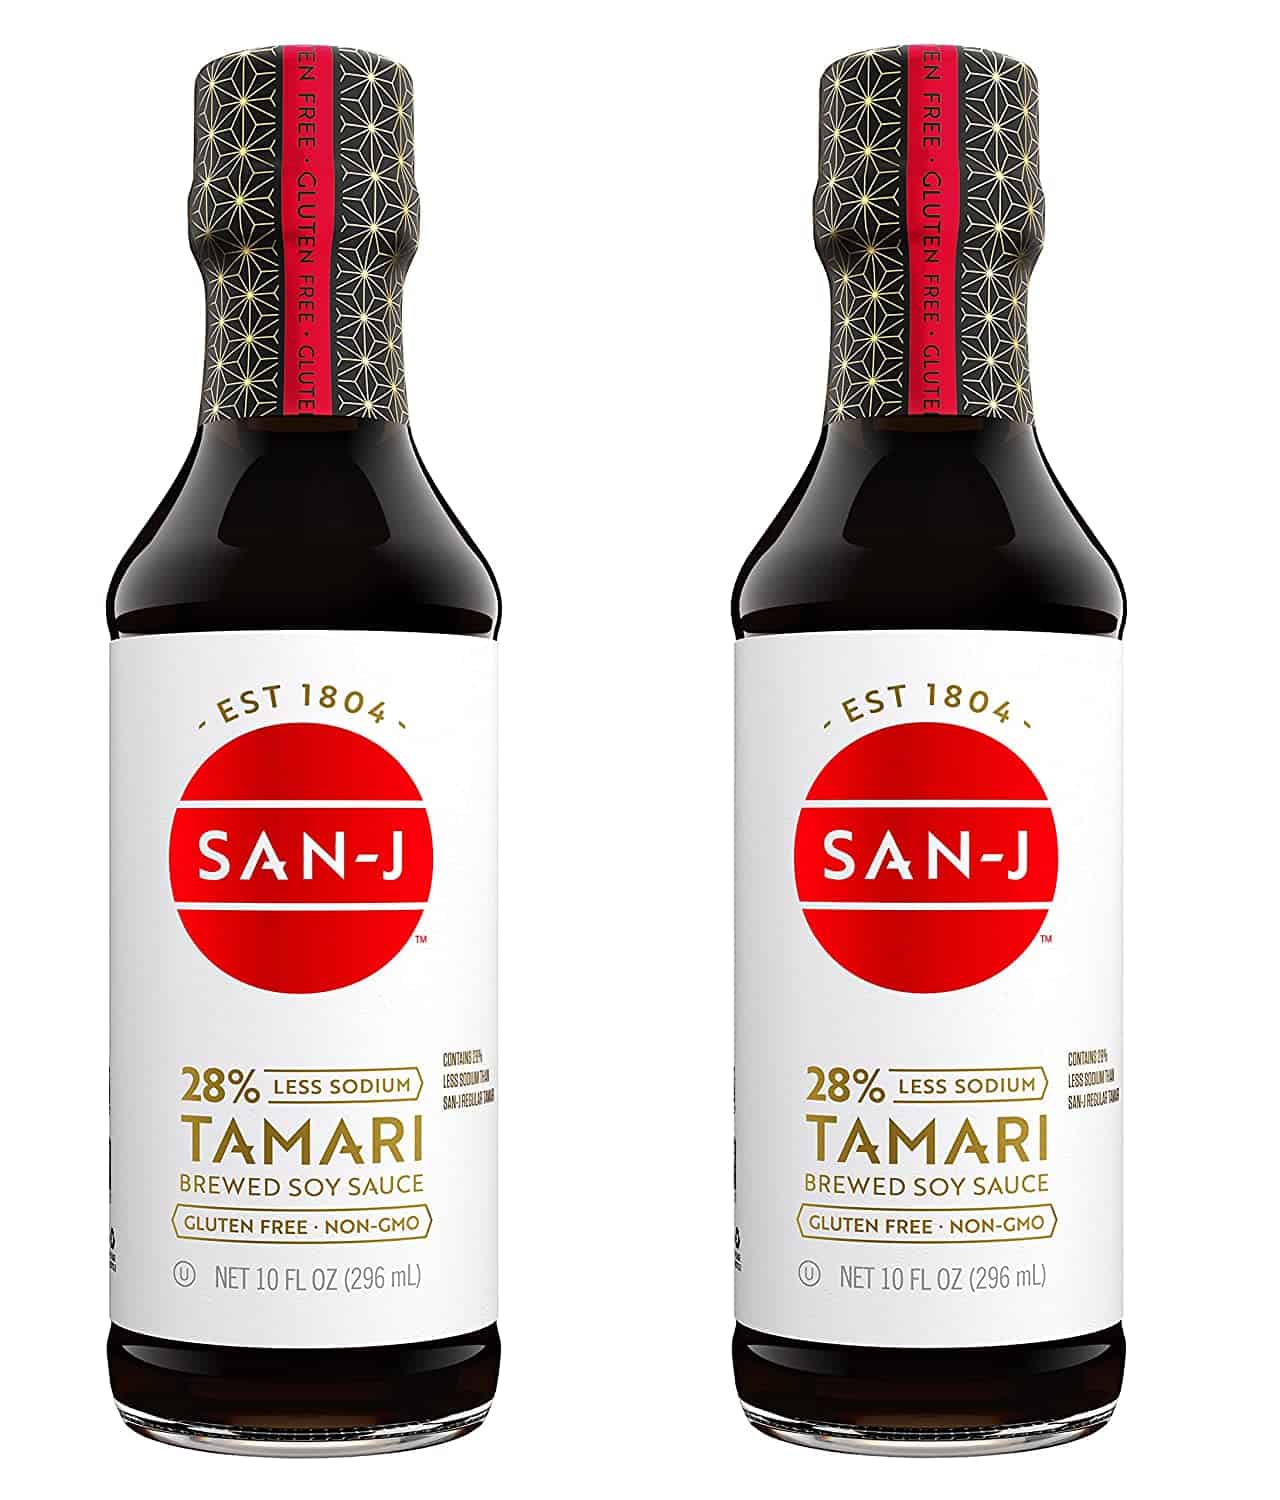 La mejor salsa de soya tamari: San-J Gluten Free Tamari